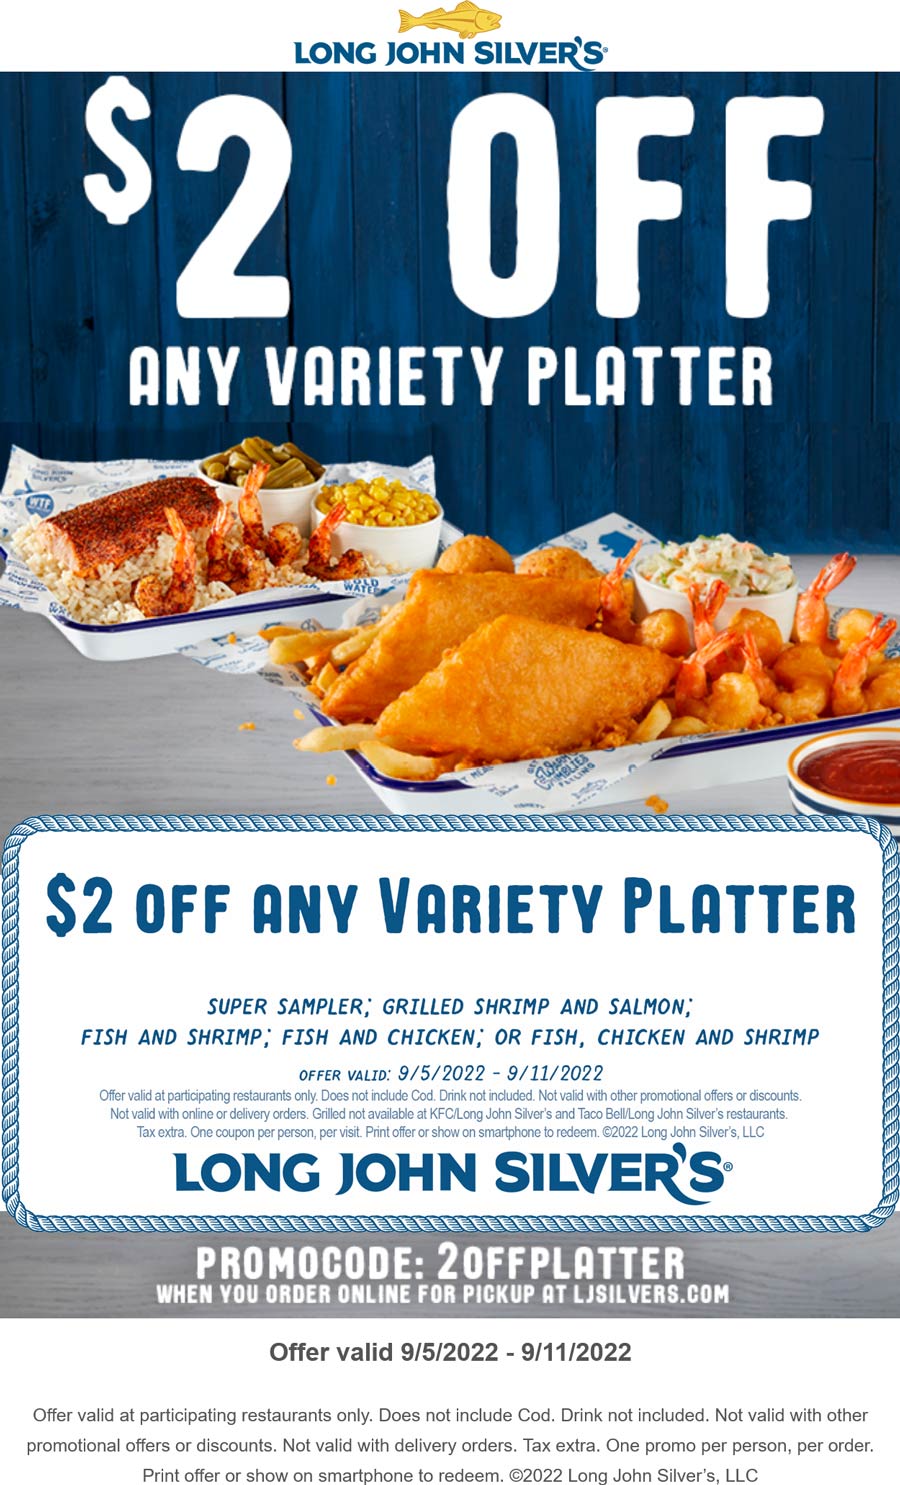 Long John Silvers restaurants Coupon  $2 off any variety platter at Long John Silvers restaurants, or online via promo code 2OFFPLATTER #longjohnsilvers 